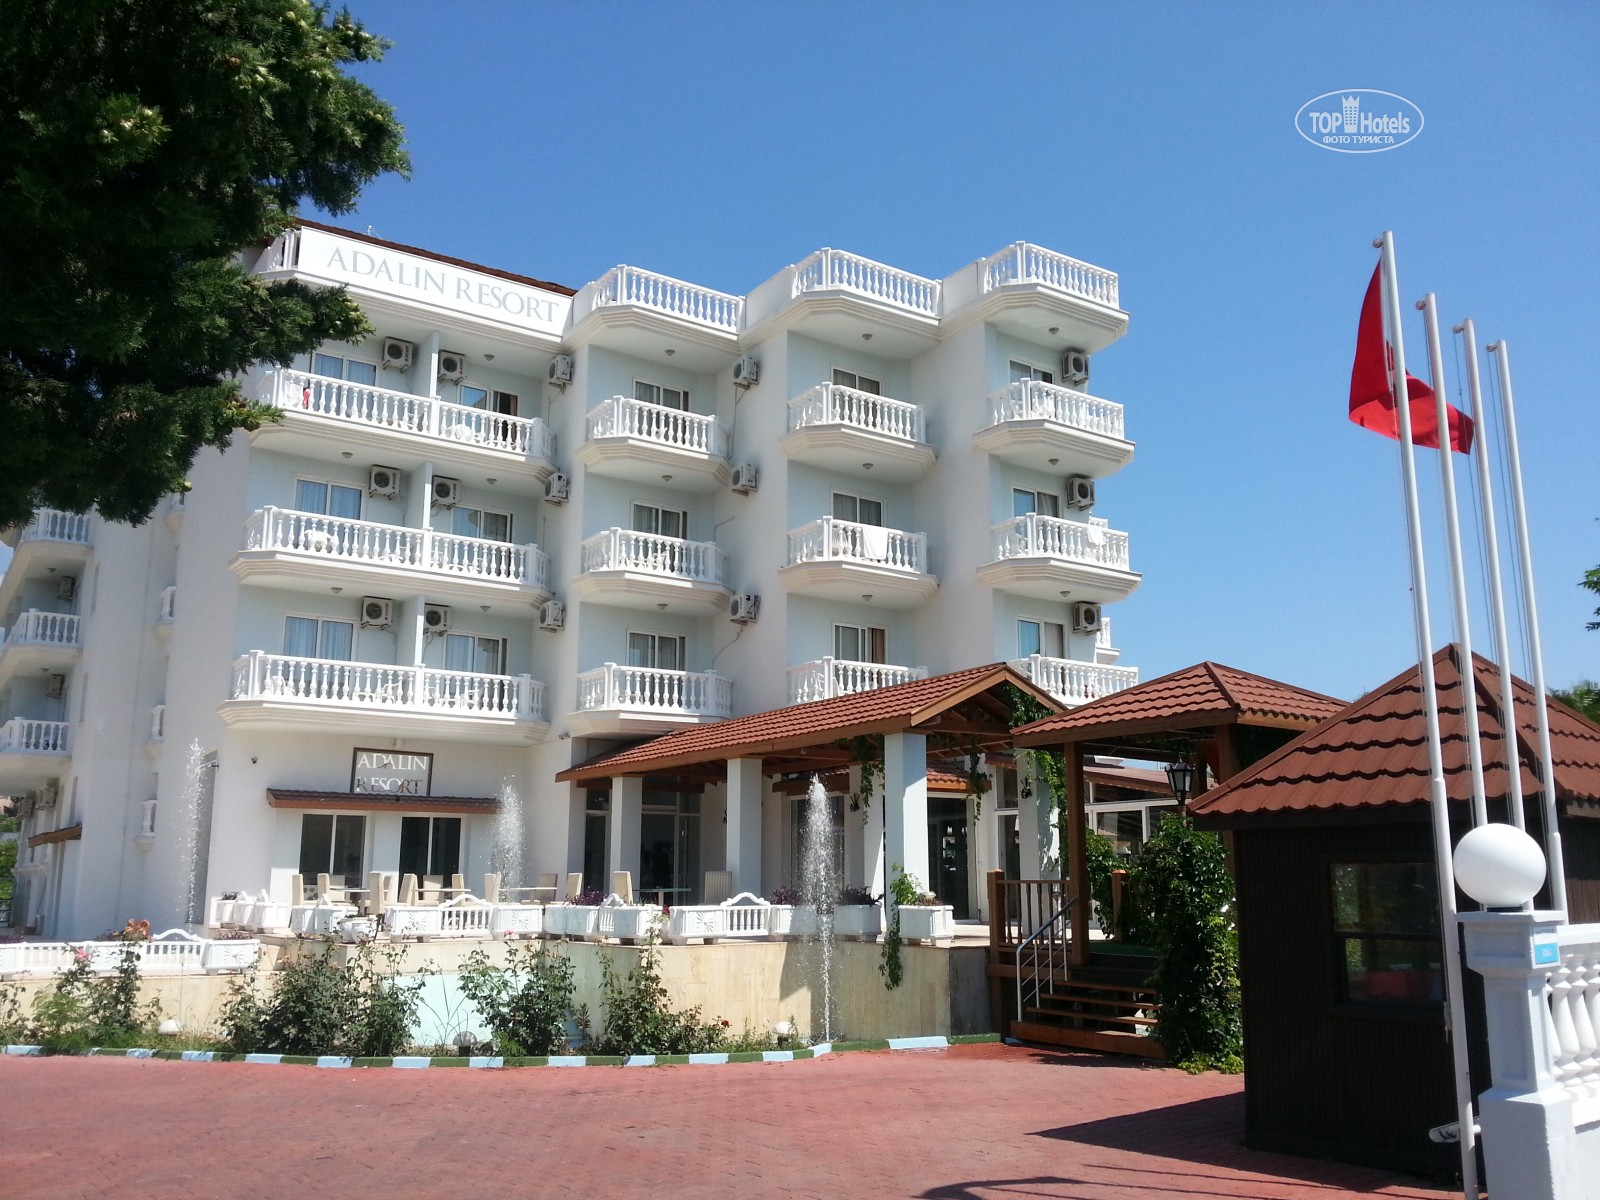 Adalin Resort Kemer, Kemer, Turcja, zdjęcia z wakacje